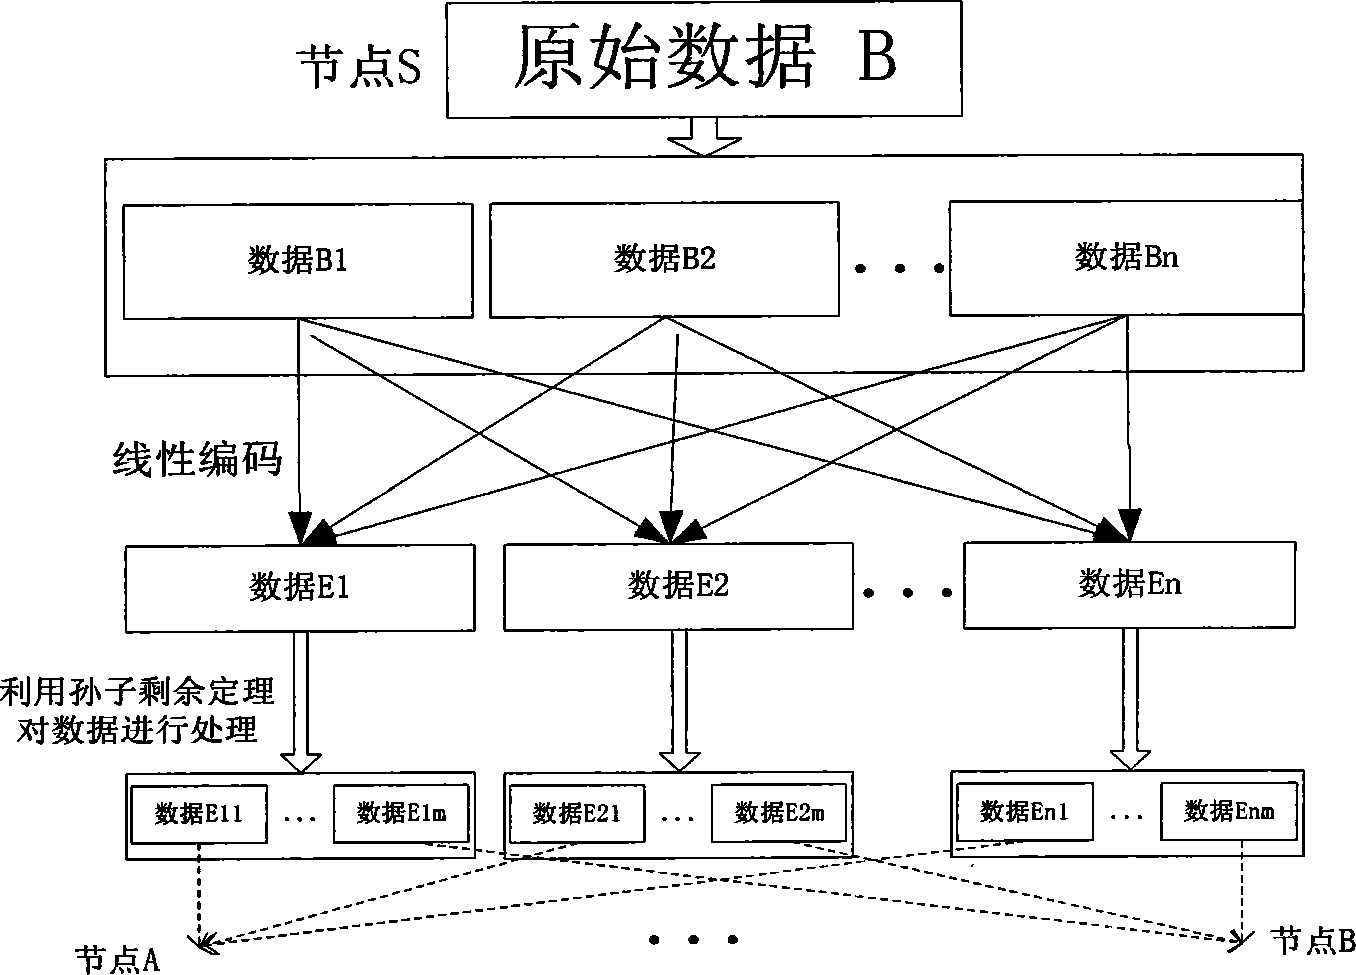 Reliable wireless sensor network data transmission method based on Chinese remainder theorem